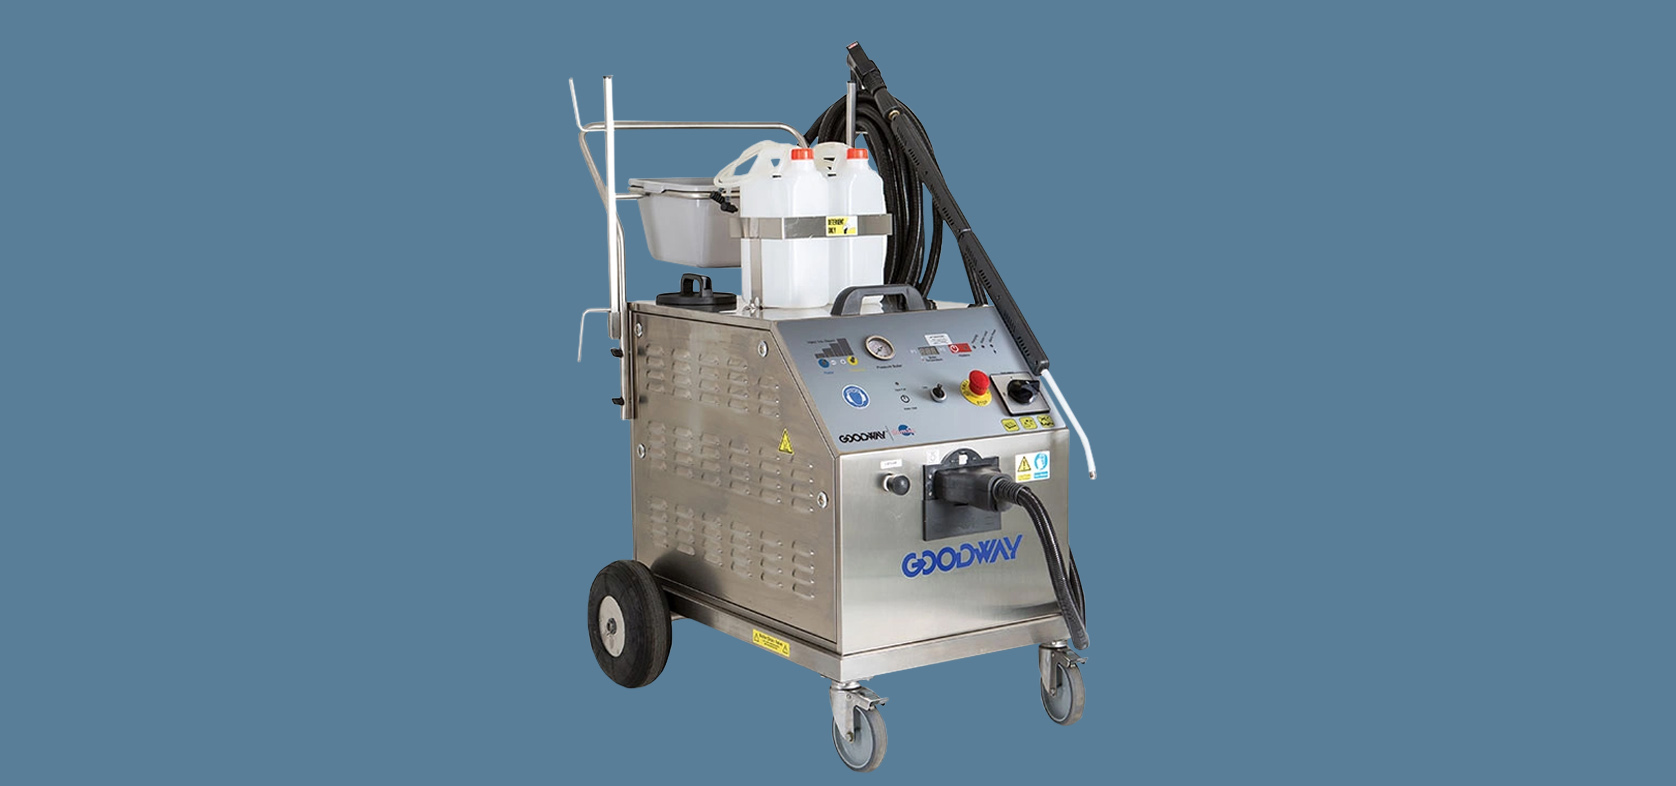 GOODWAY STEAM sanitizing machine model GVC-18000 - Irom Italia